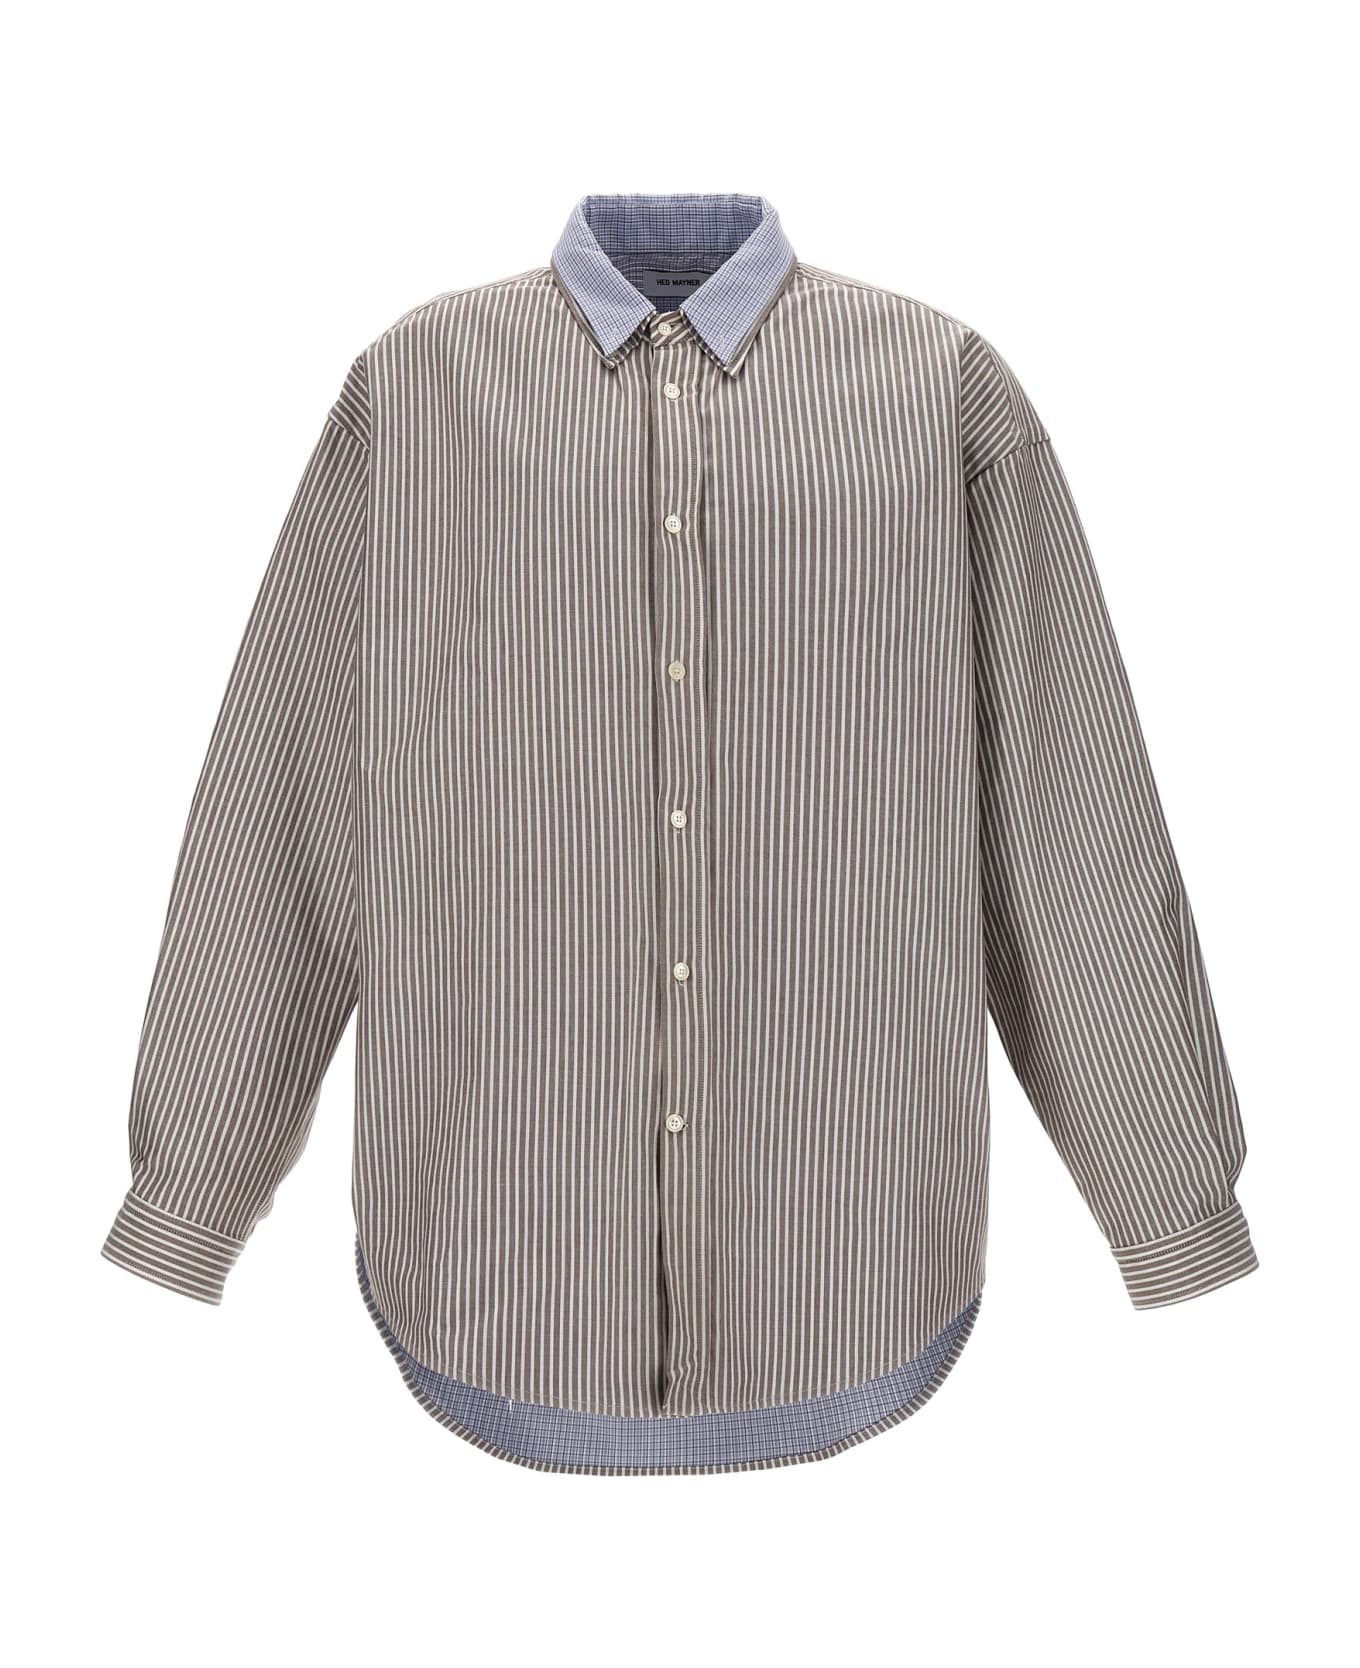 Hed Mayner 'pinstripe Oxford' Shirt - White